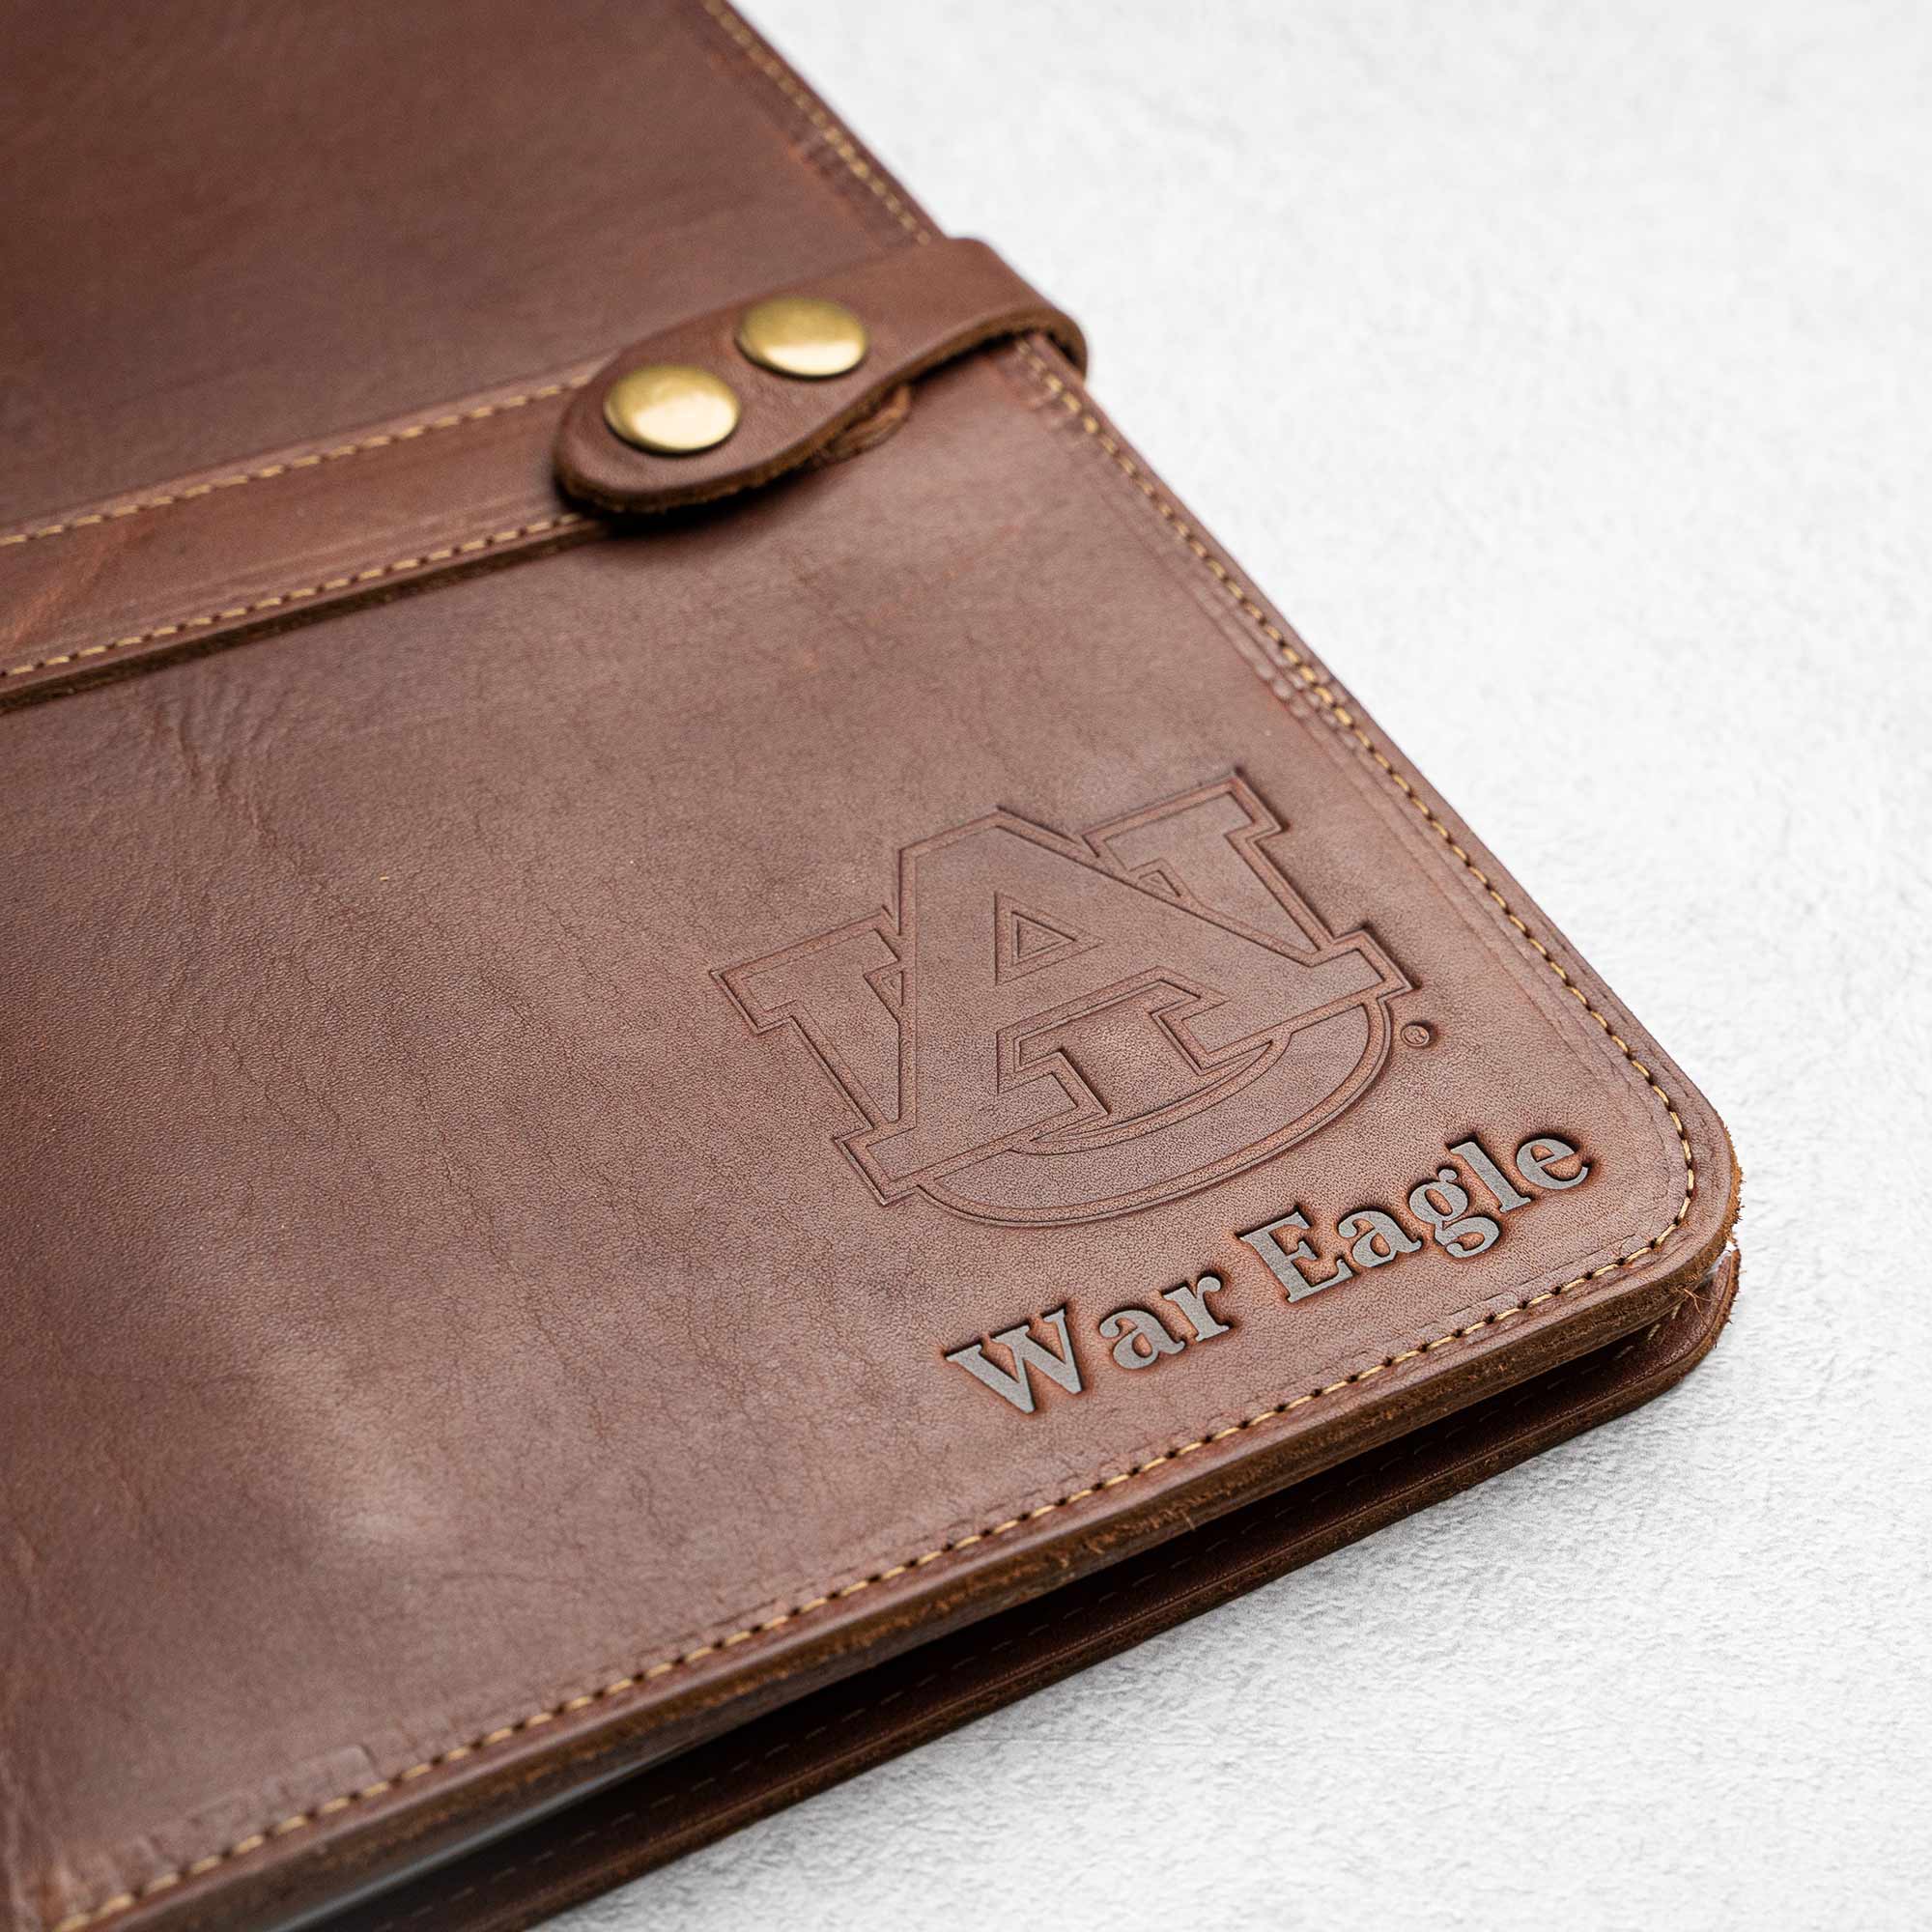 Fine leather padfolio/portfolio with Auburn University logo